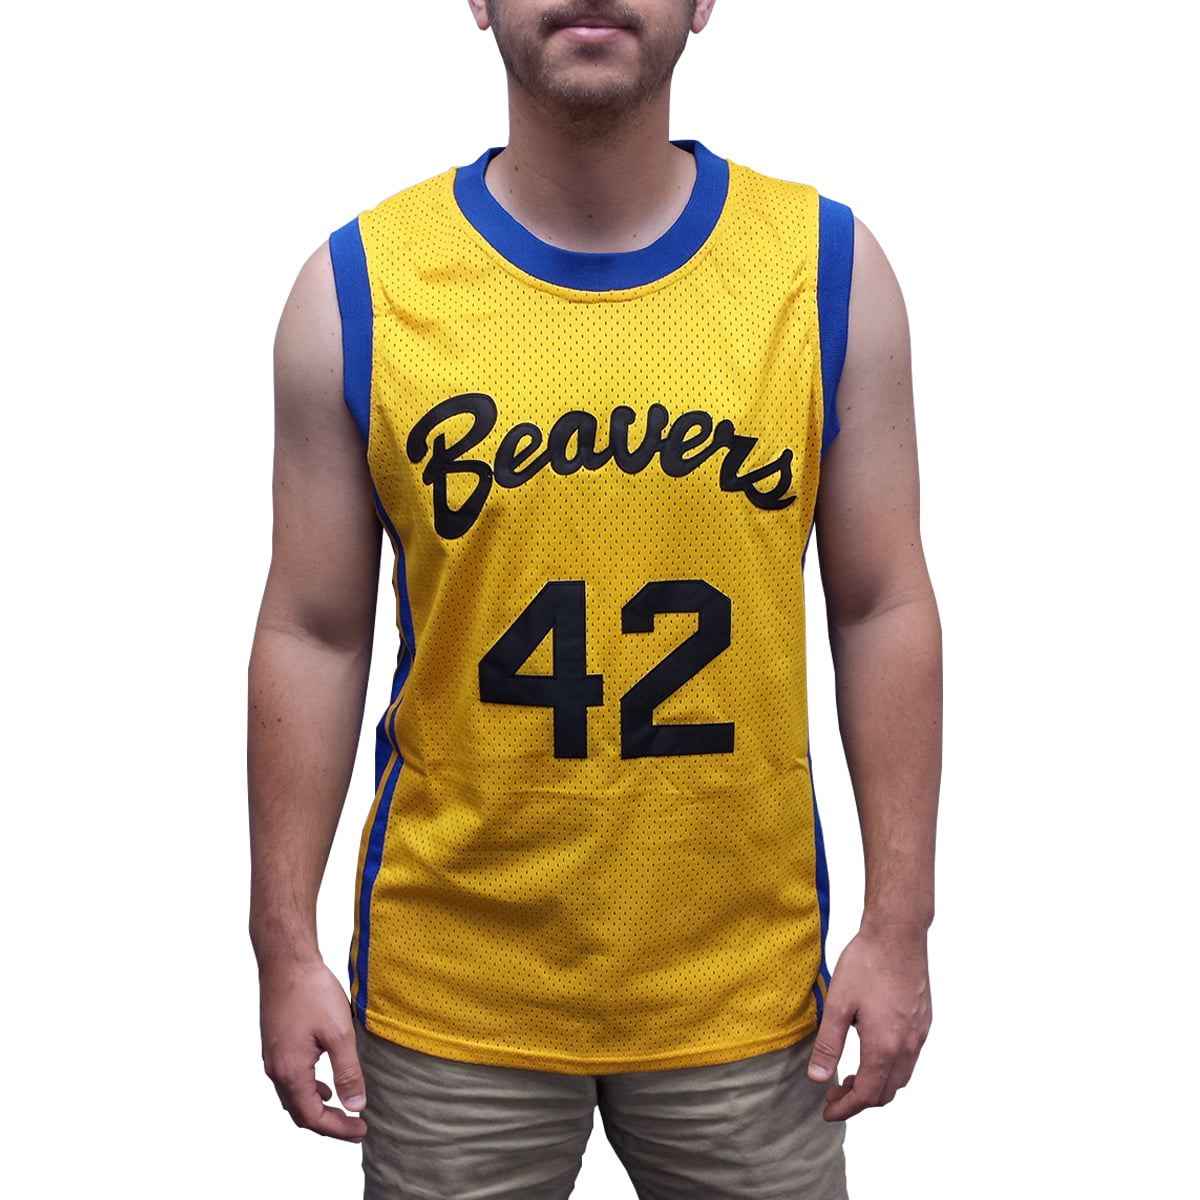 beavers 42 jersey